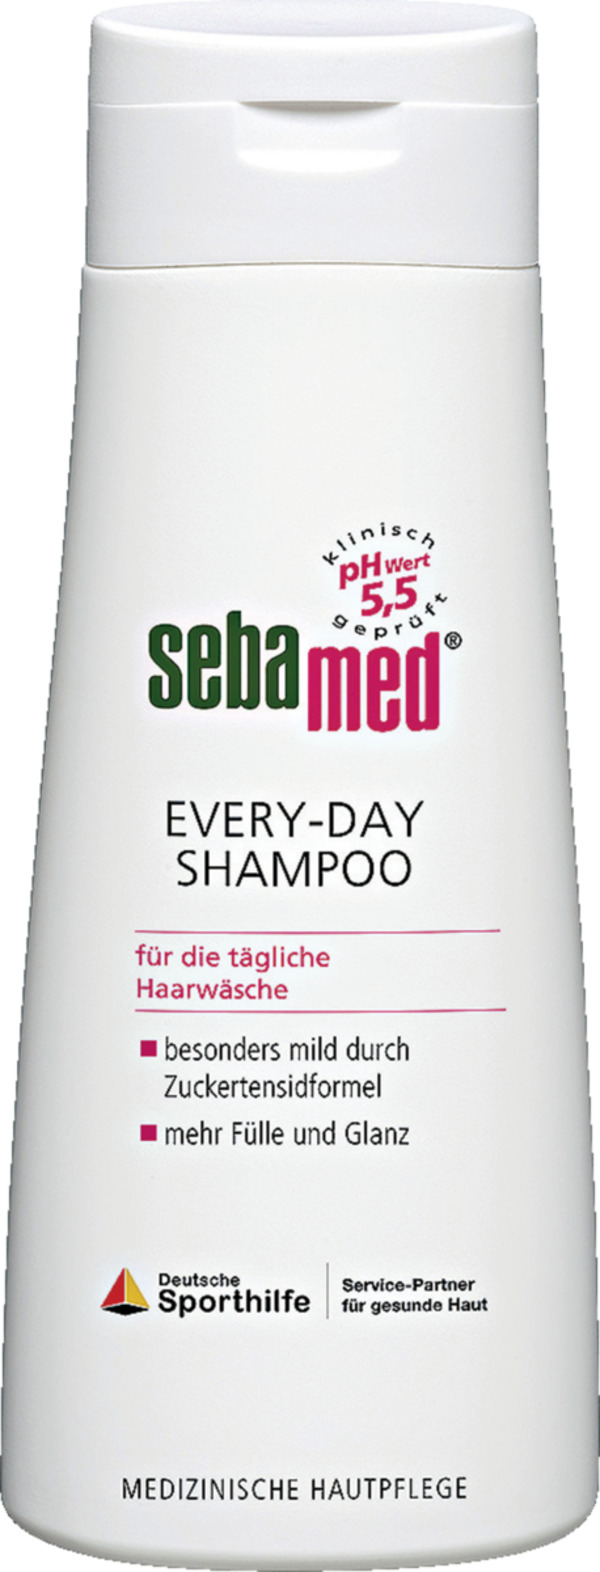 Bild 1 von sebamed Every-Day Shampoo 1.50 EUR/100 ml